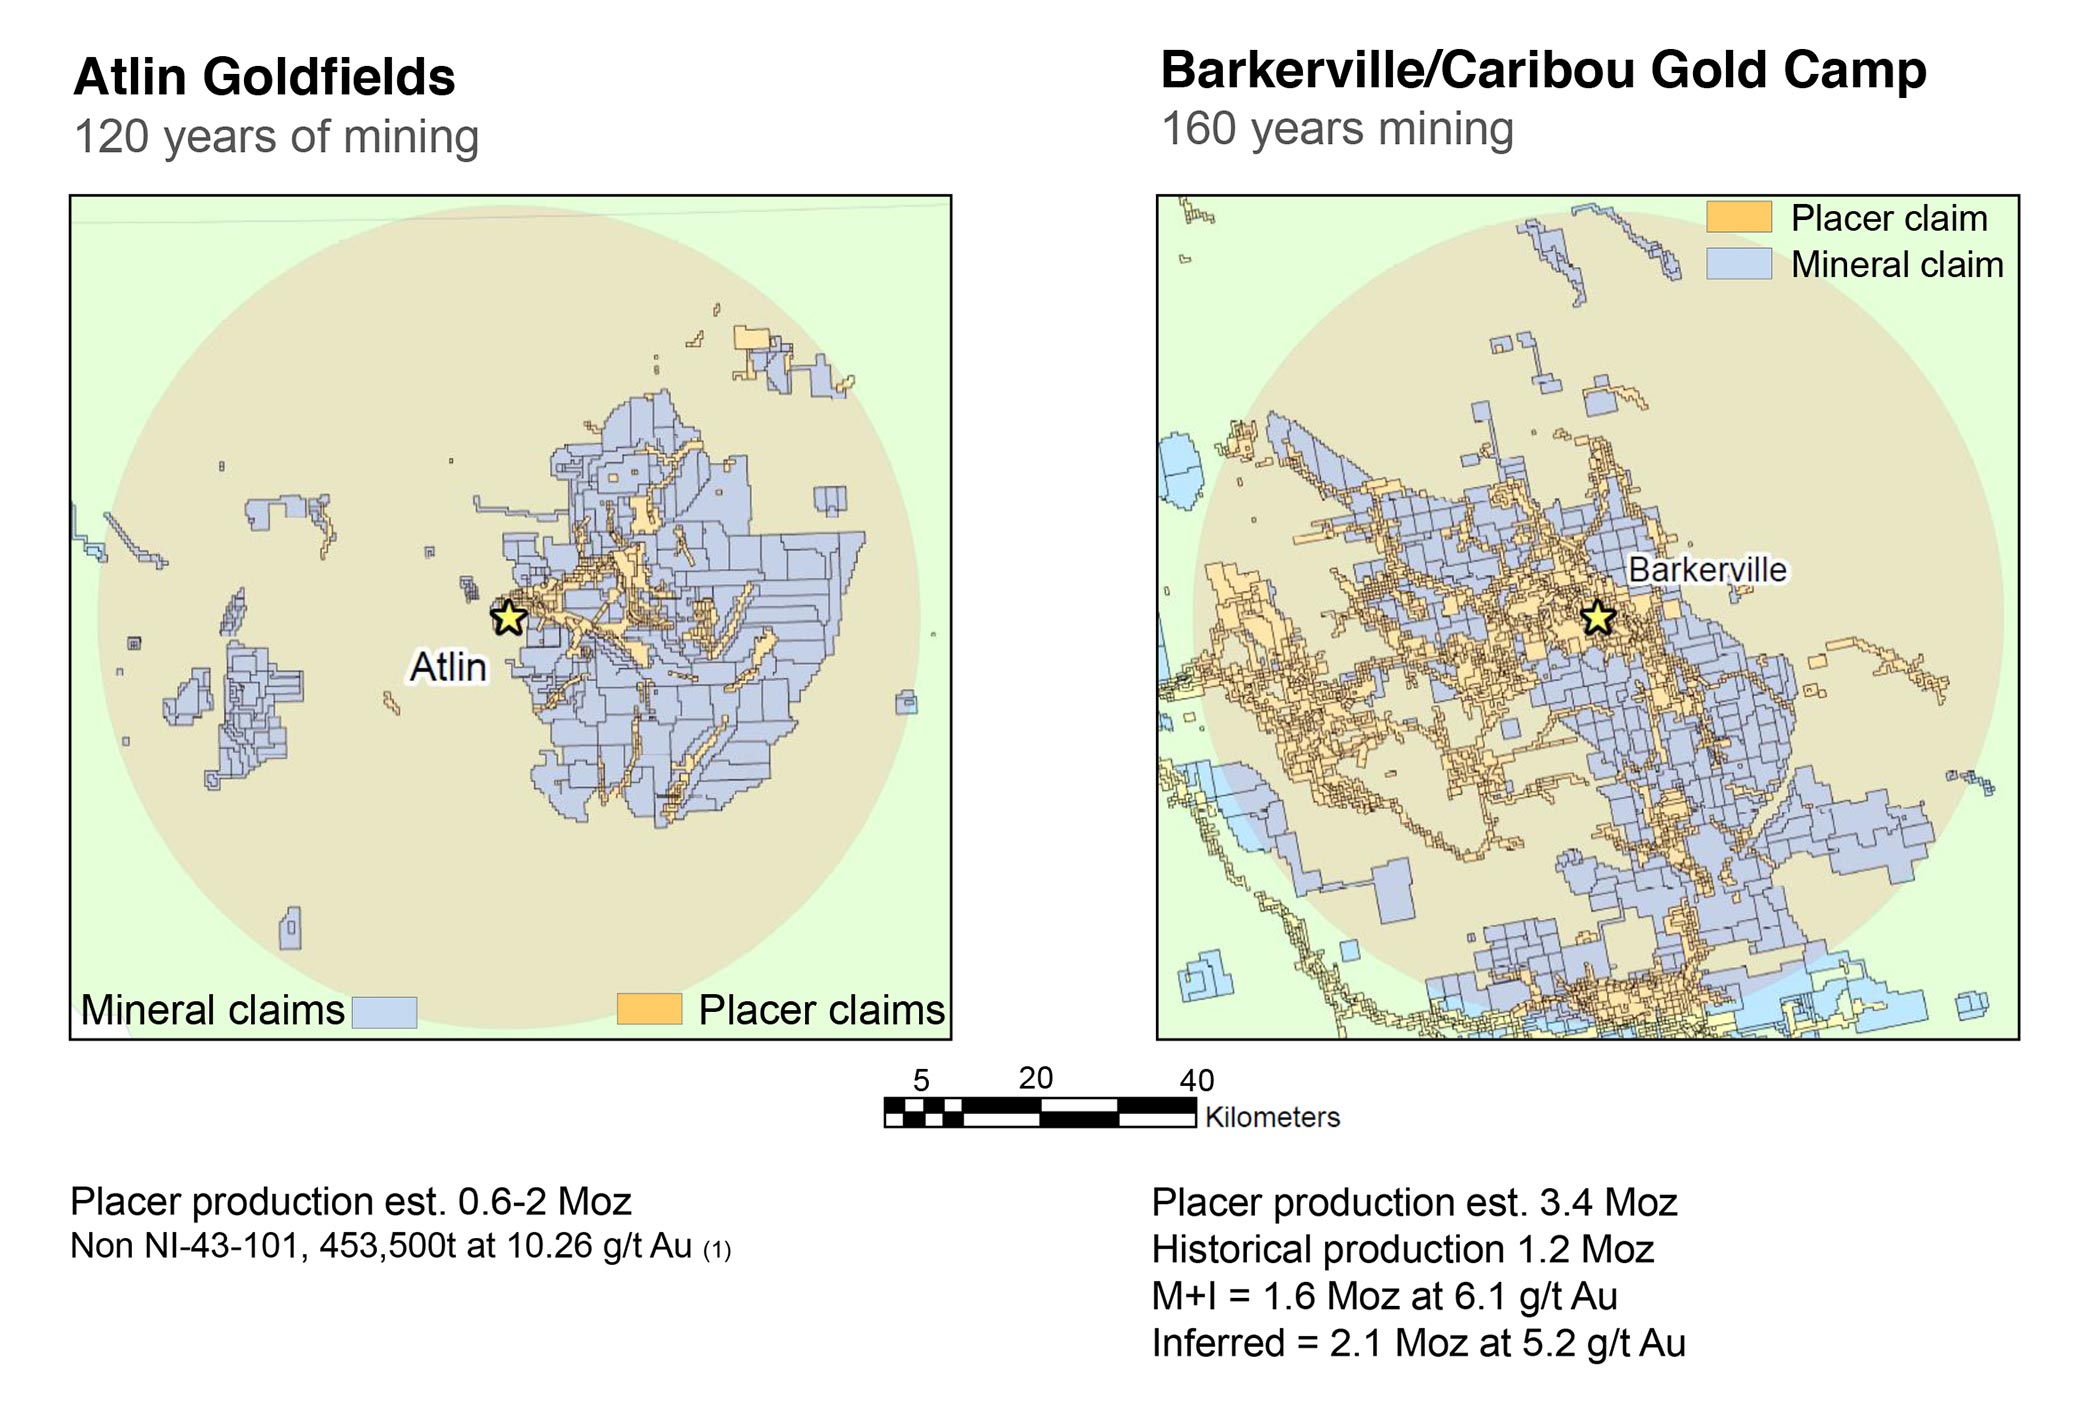 Atlin Goldfields vs. Barkerville/Caribou Gold Camp